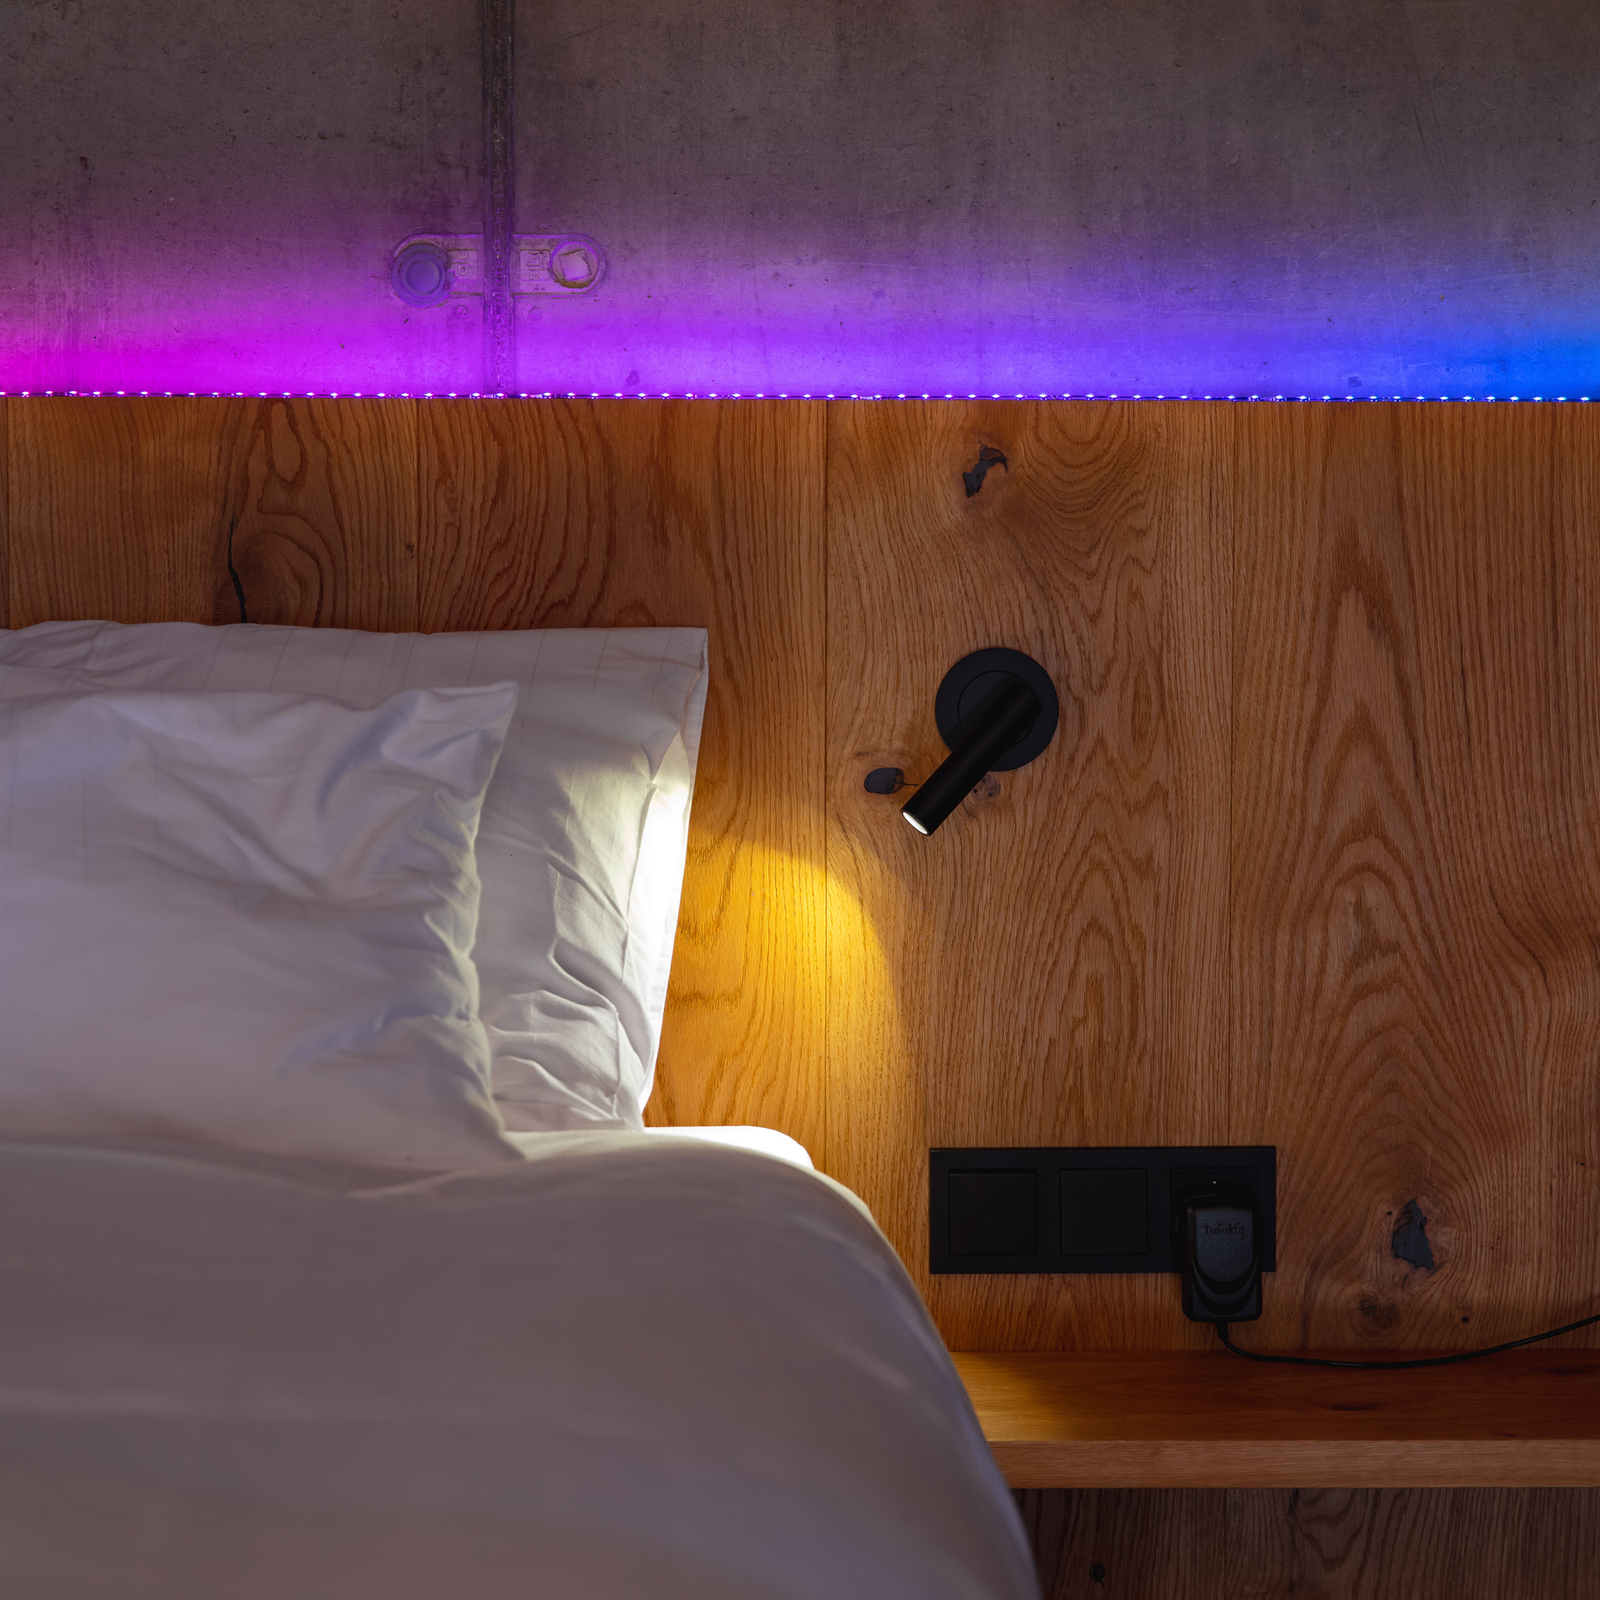 Twinkly Light Line LED-stripe RGB 1,5m utvidelse